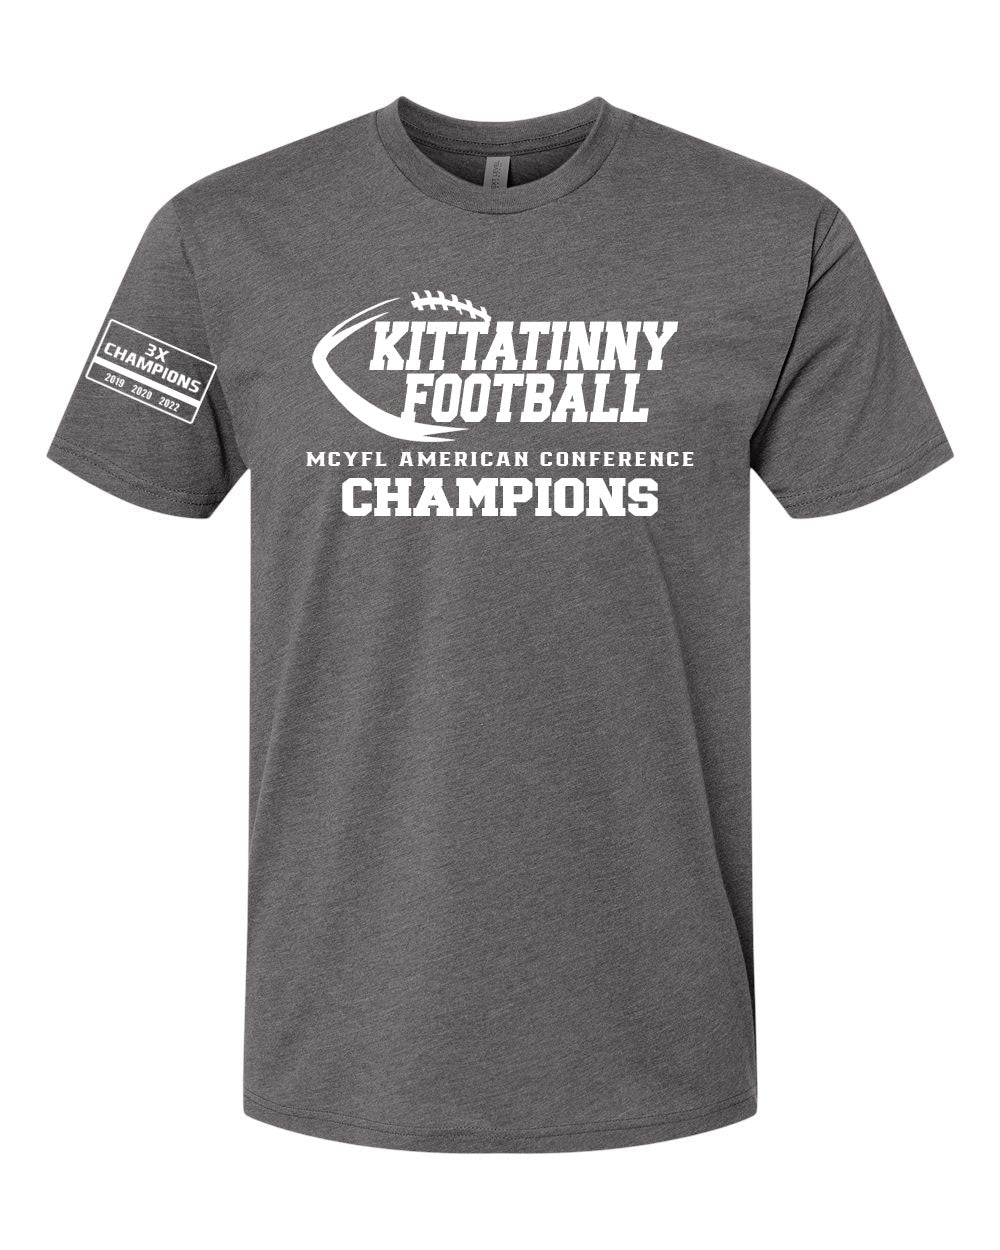 Kittatinny Football Champs t-Shirt